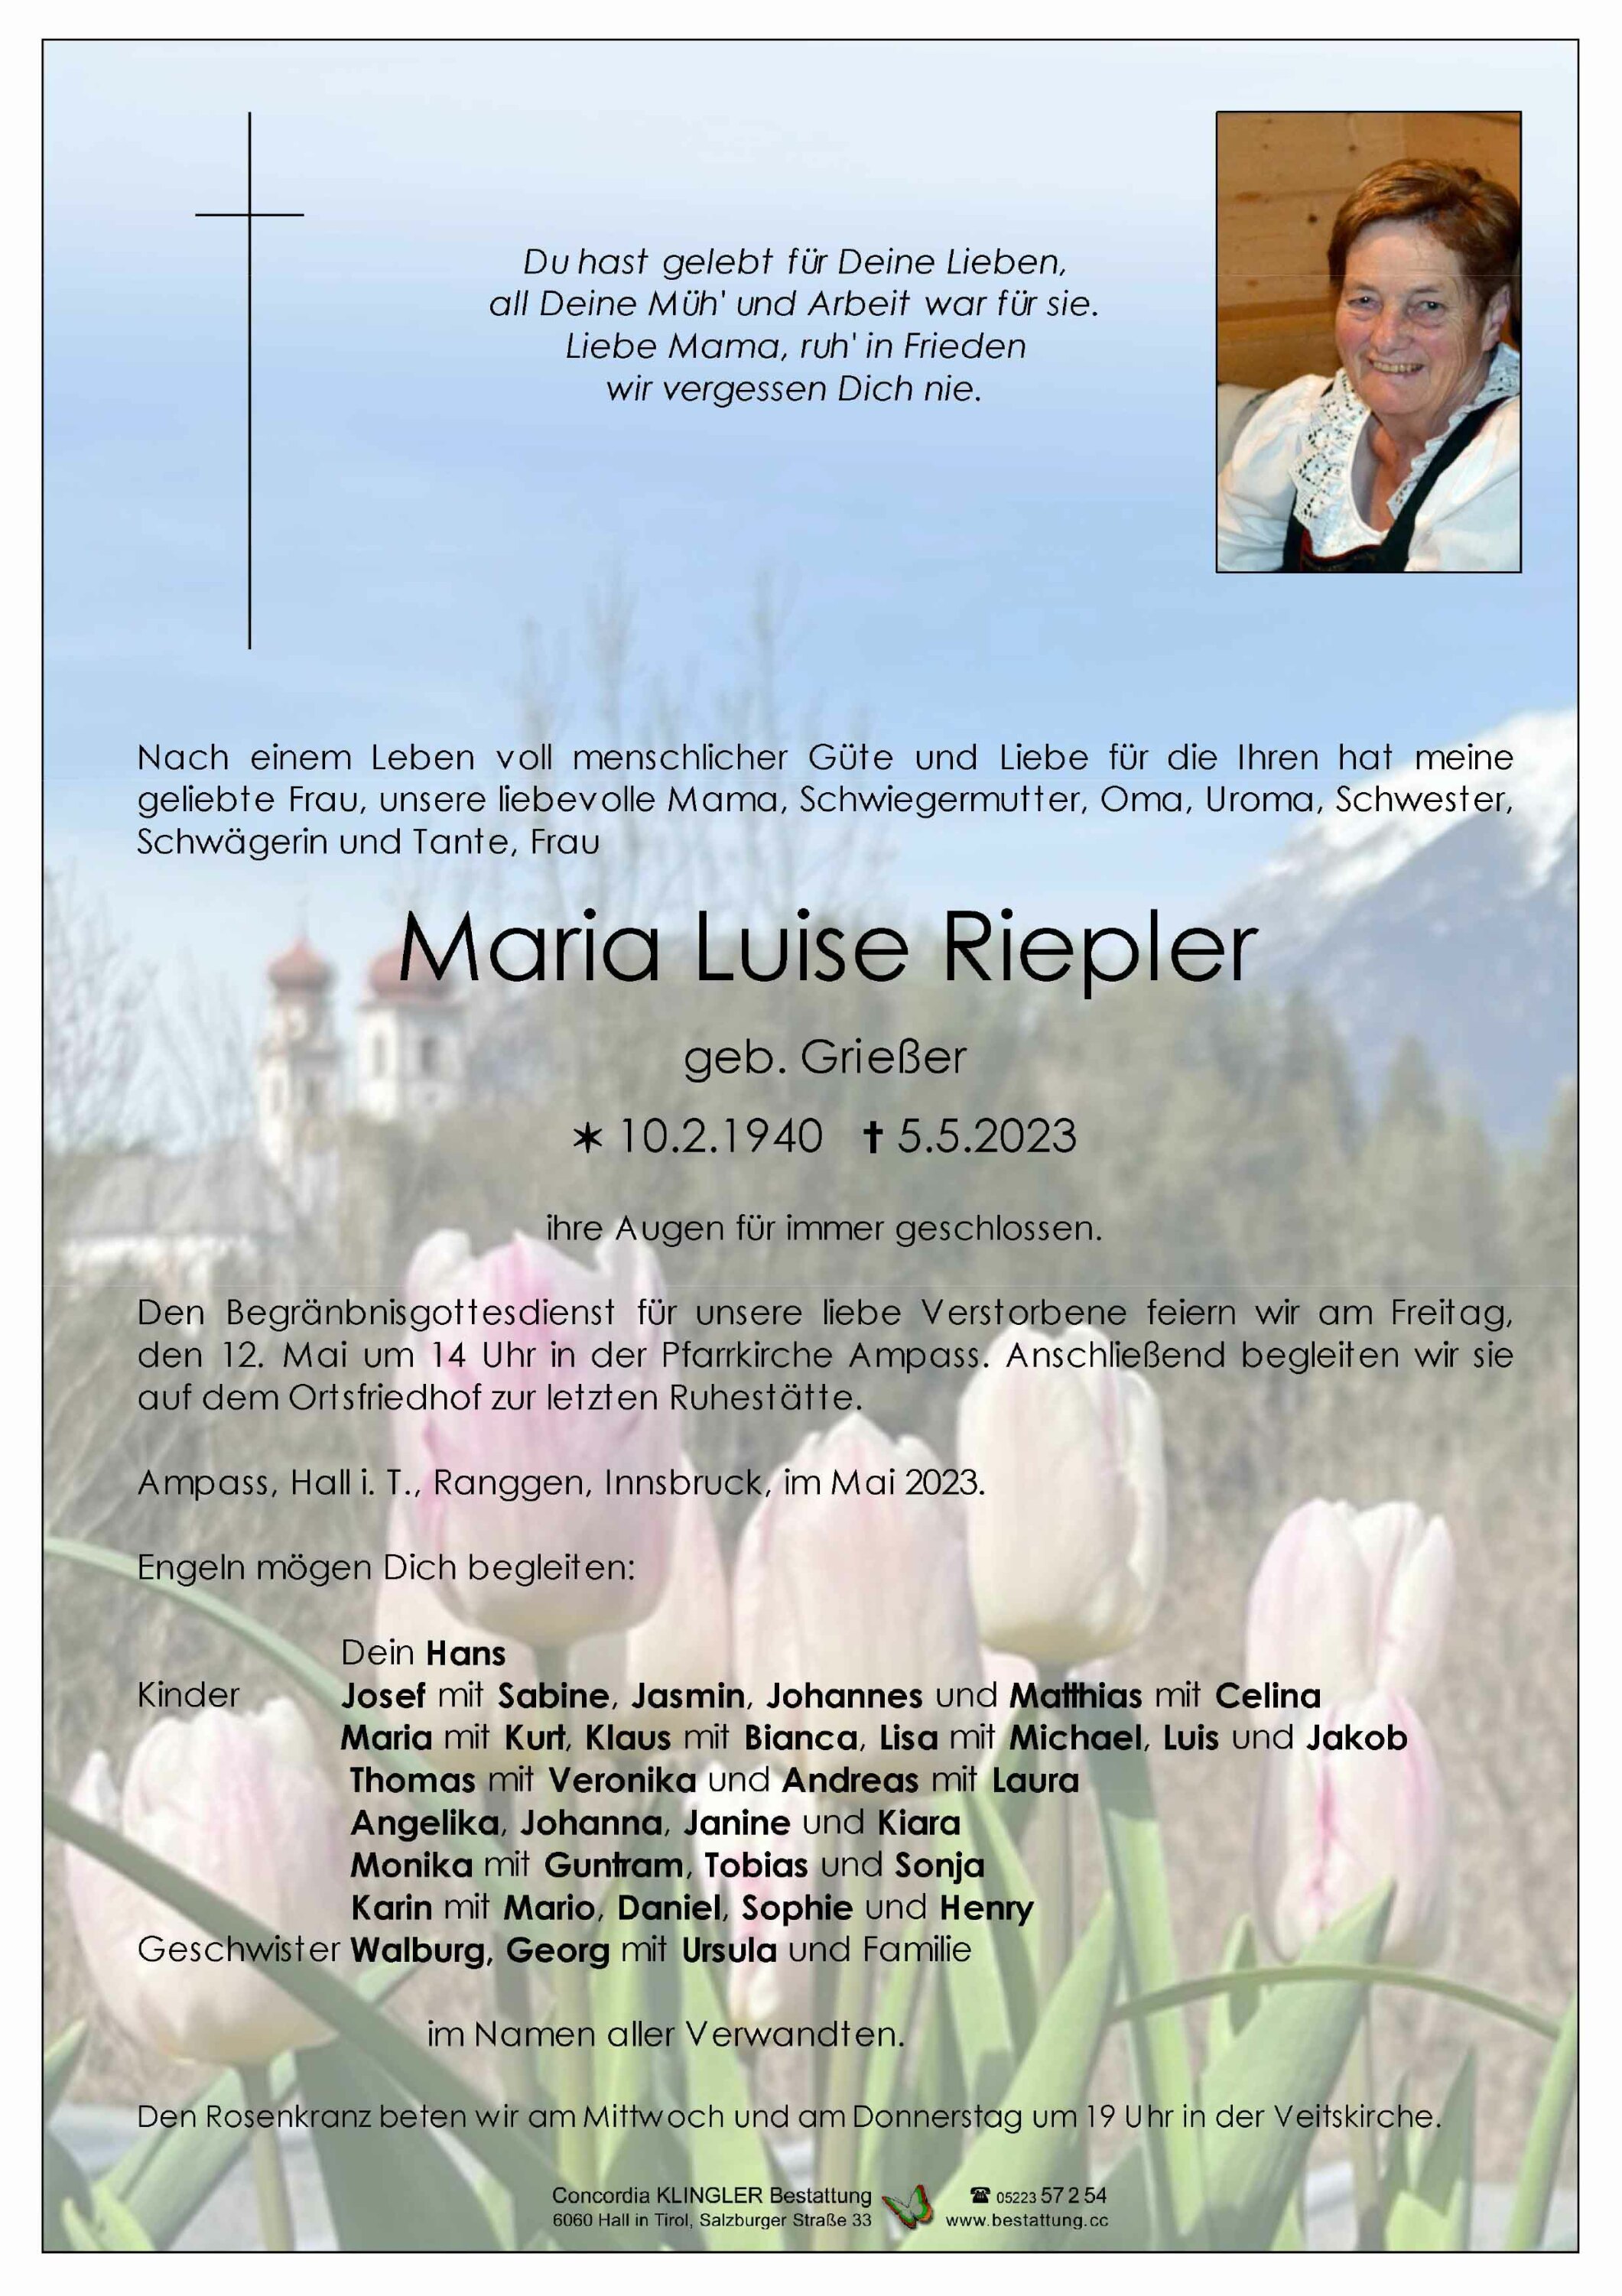 Maria Luise Riepler